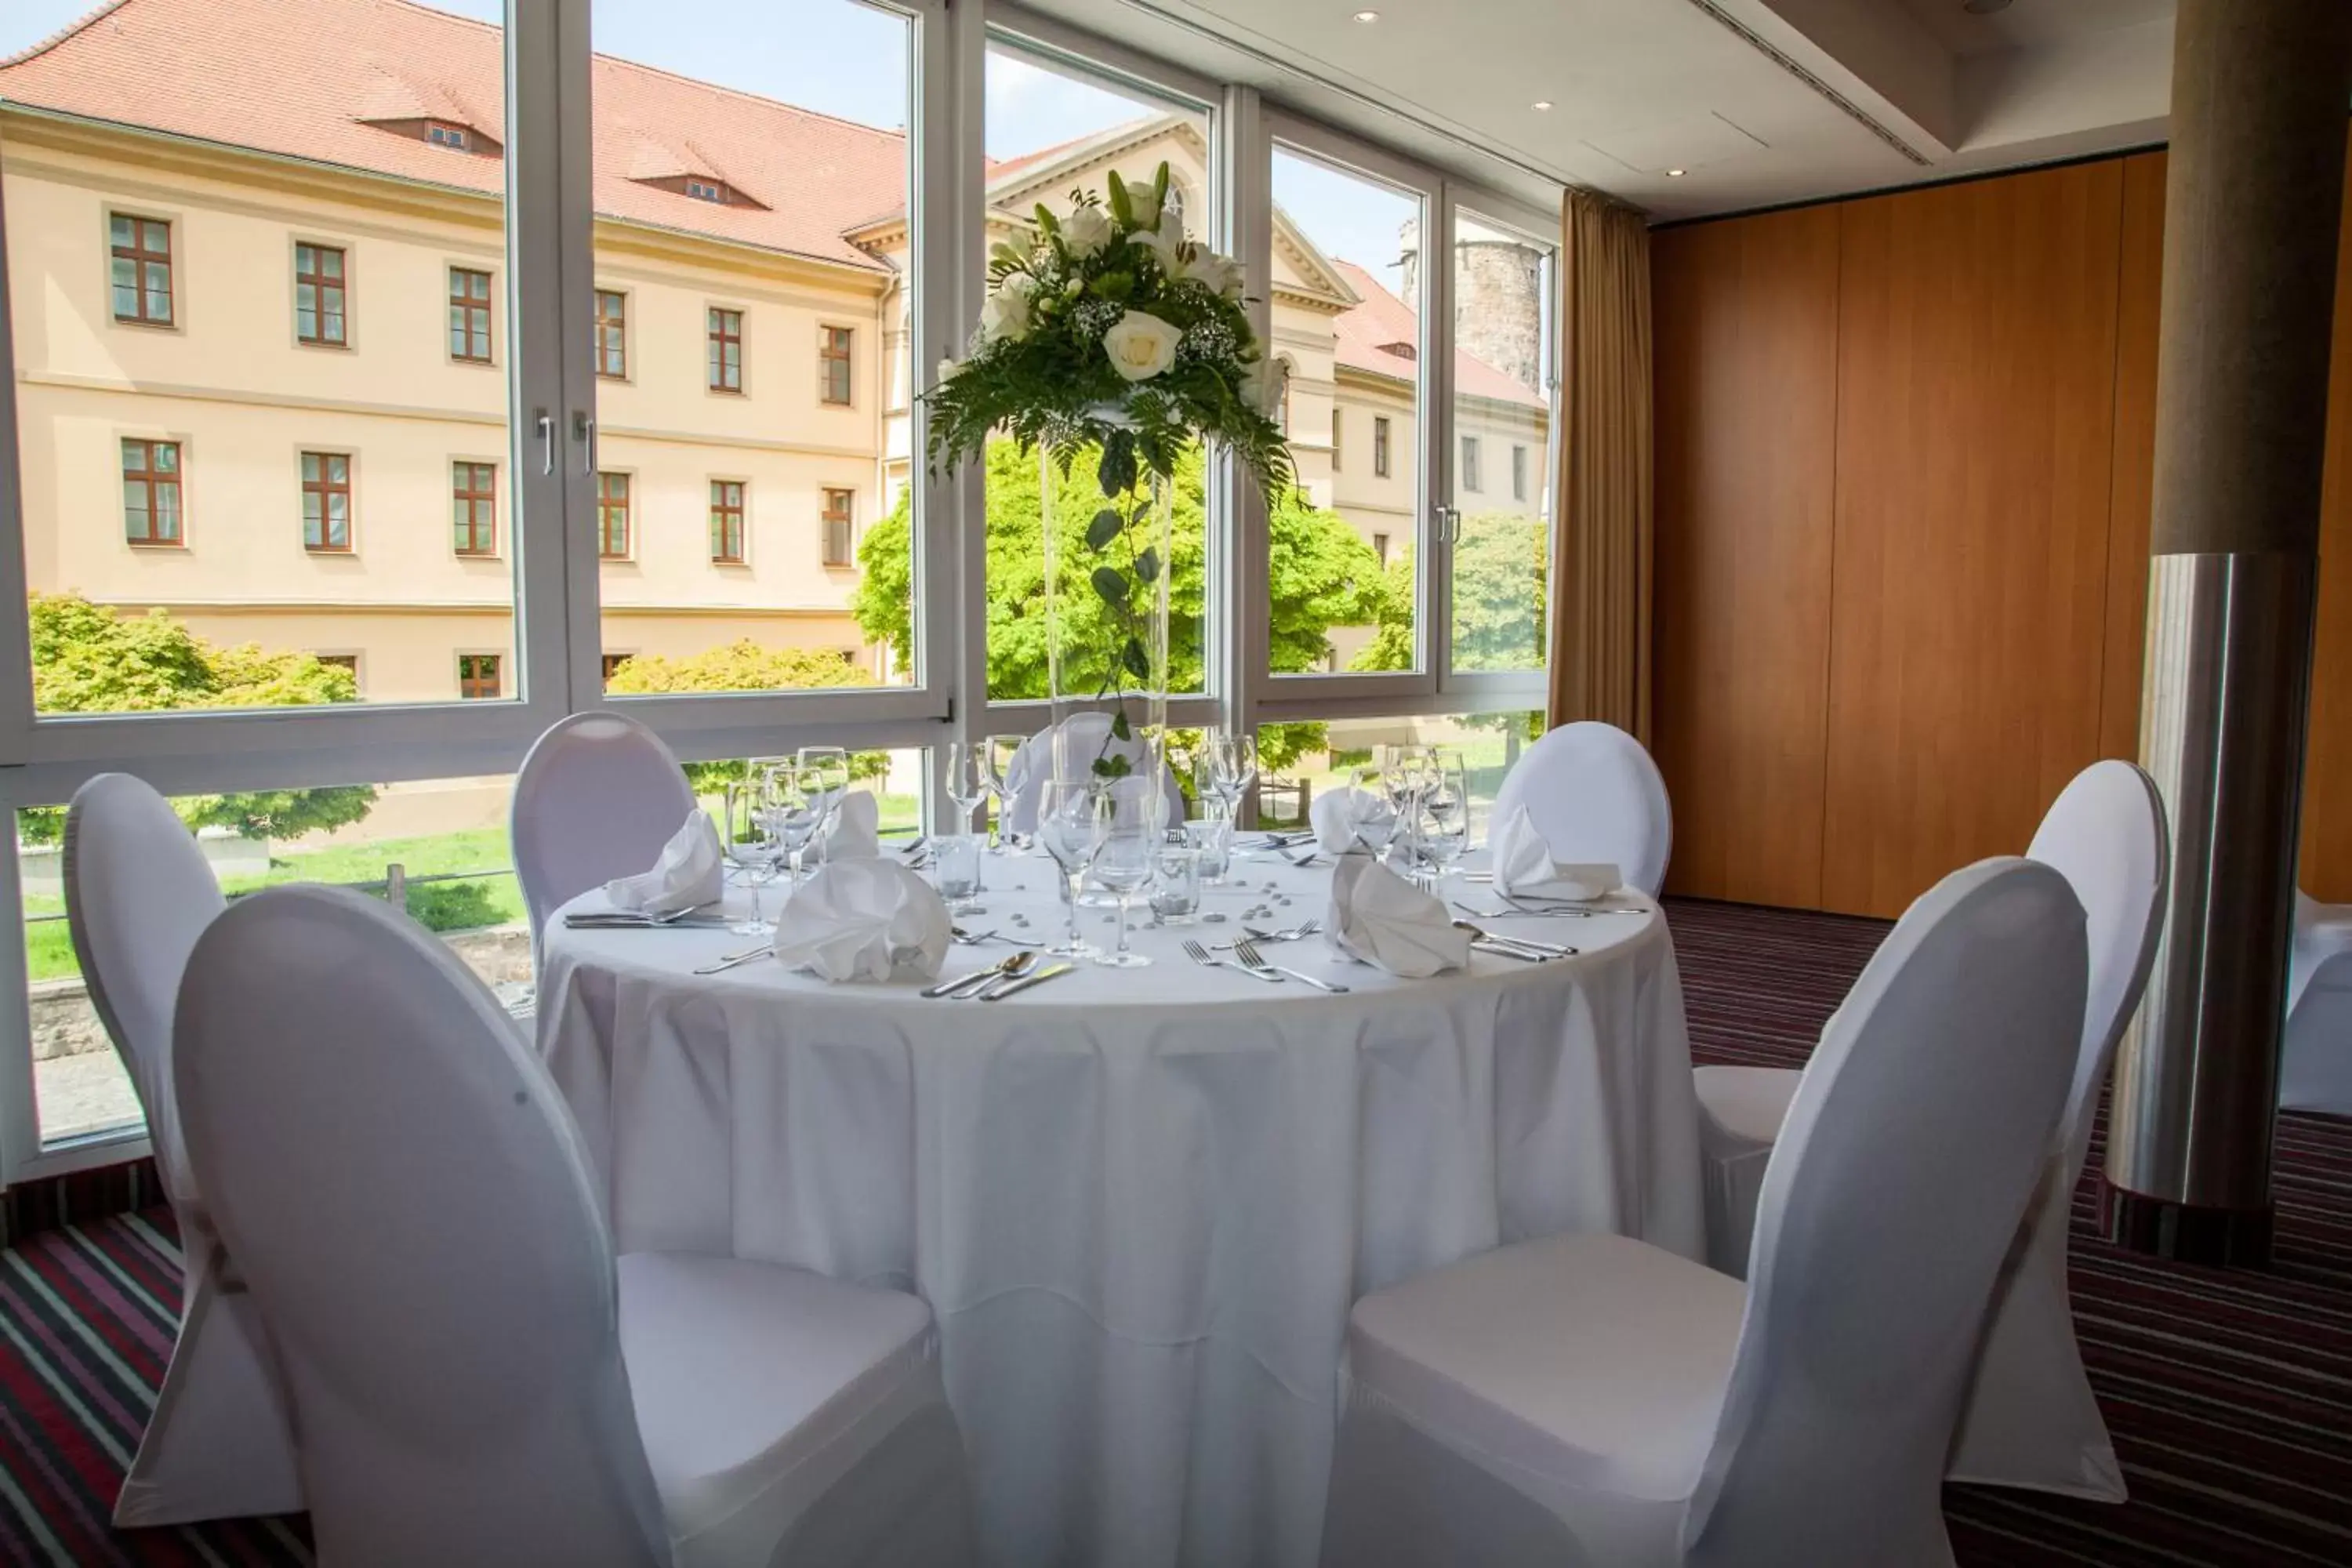 Banquet/Function facilities, Banquet Facilities in Best Western Plus Hotel Bautzen